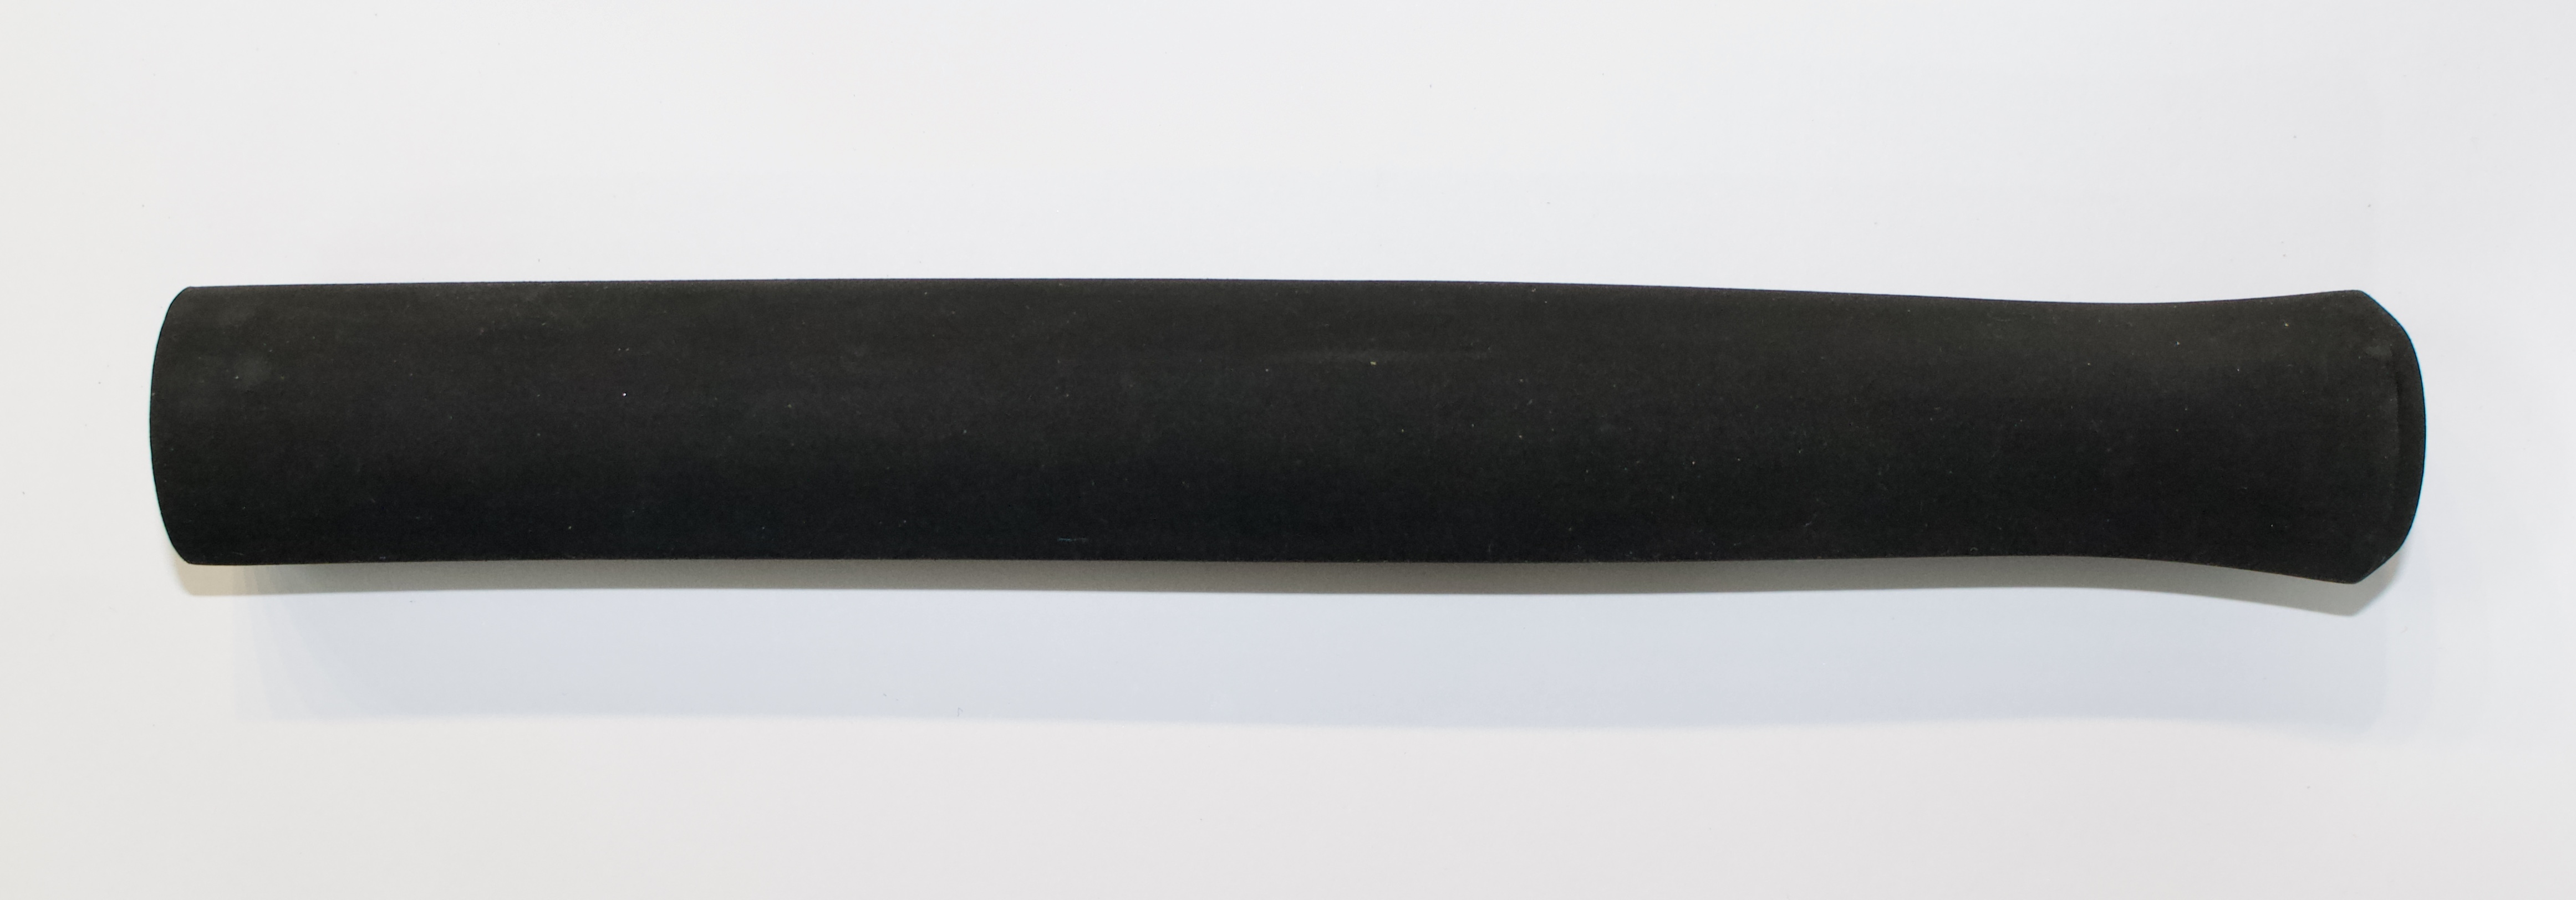 EVA Tapered Grip Black  230mm Lenght   ID 20mm  OD 29mm